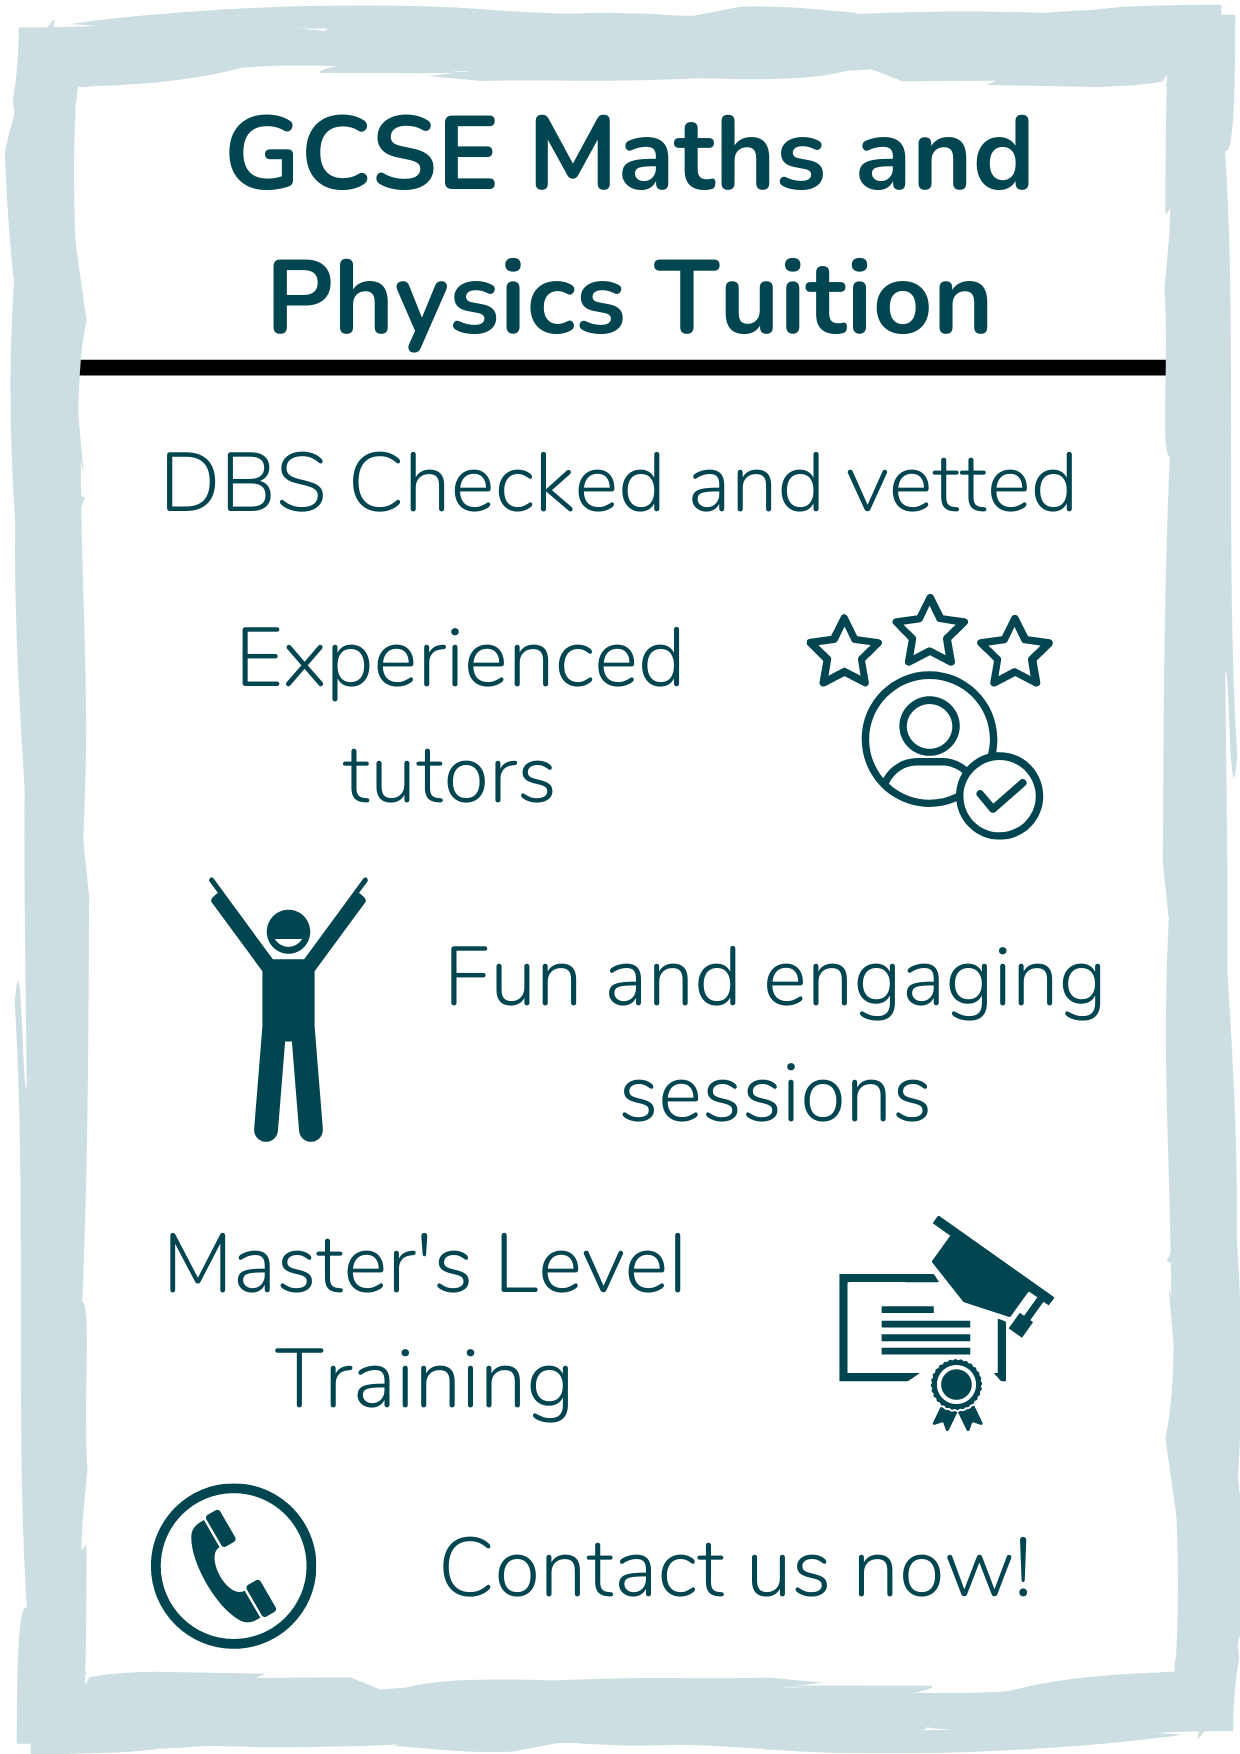 GCSE Maths and Physics Tuition Tutoring